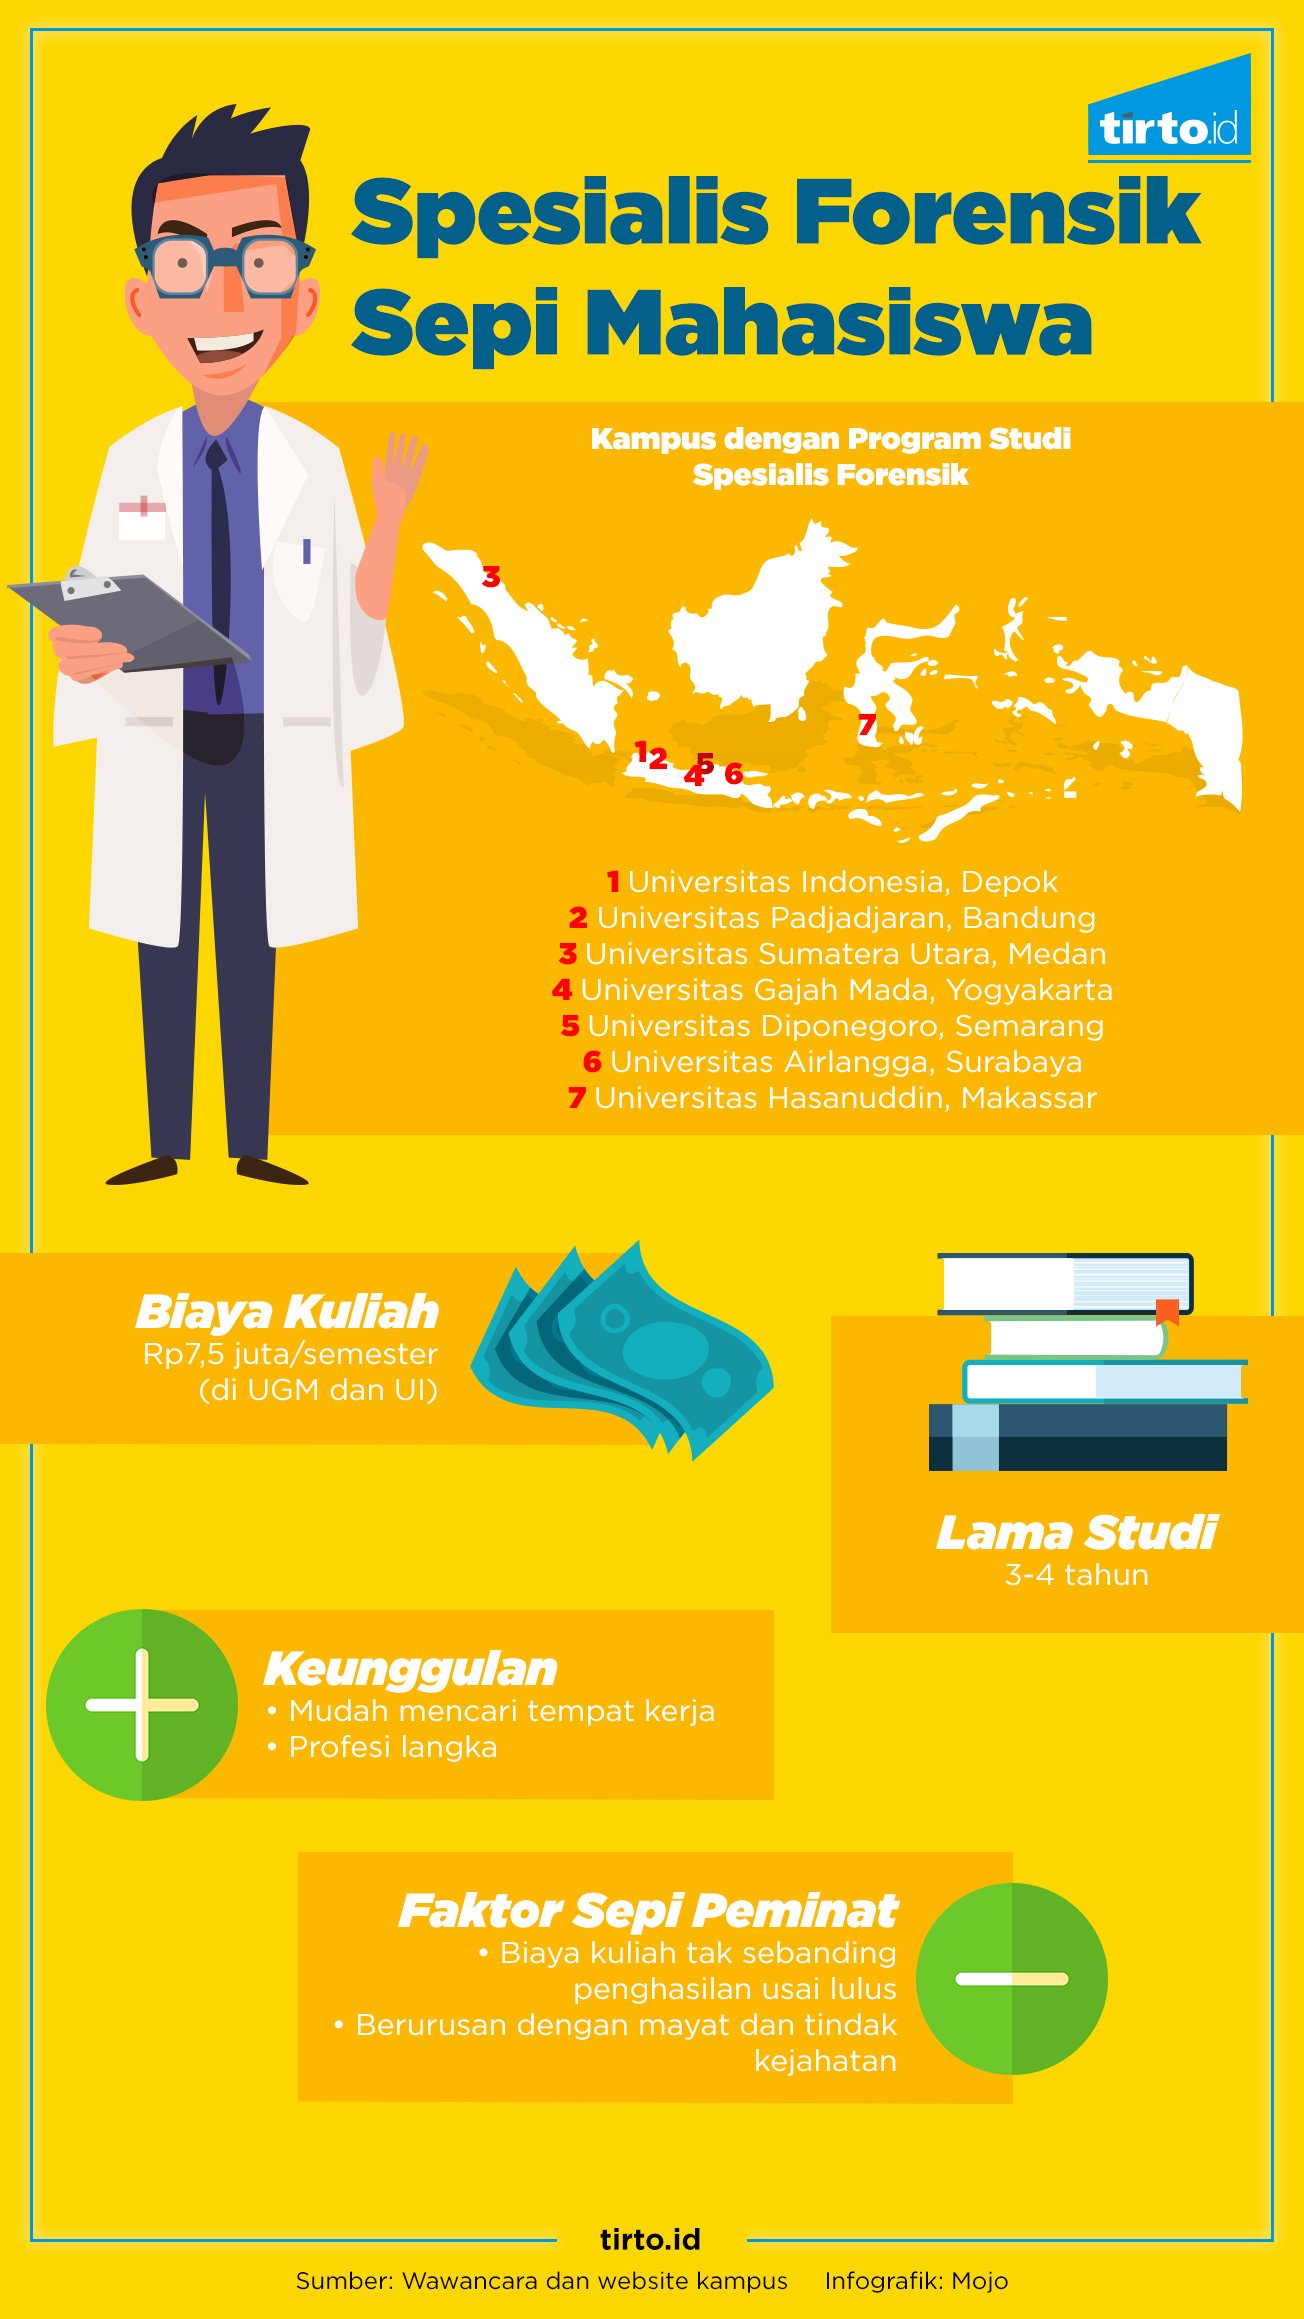 cool infografik hl dokter forensik sepi mahasiswa with lowongan kerja unair universitas airlangga terbaru bulan maret